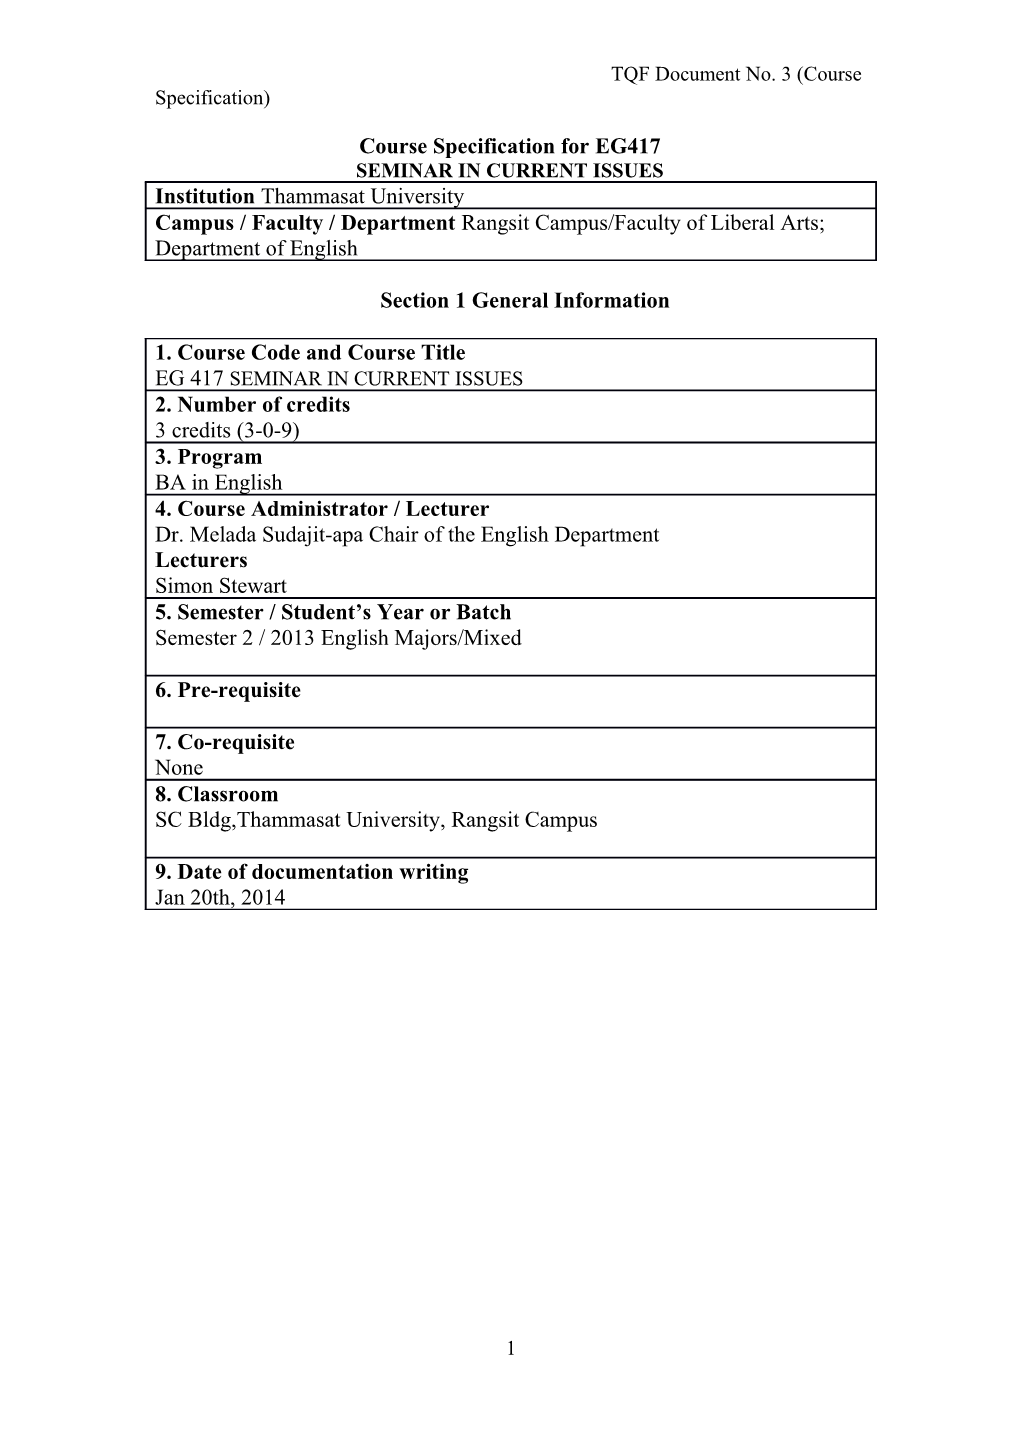 TQF Document No. 3 (Course Specification)